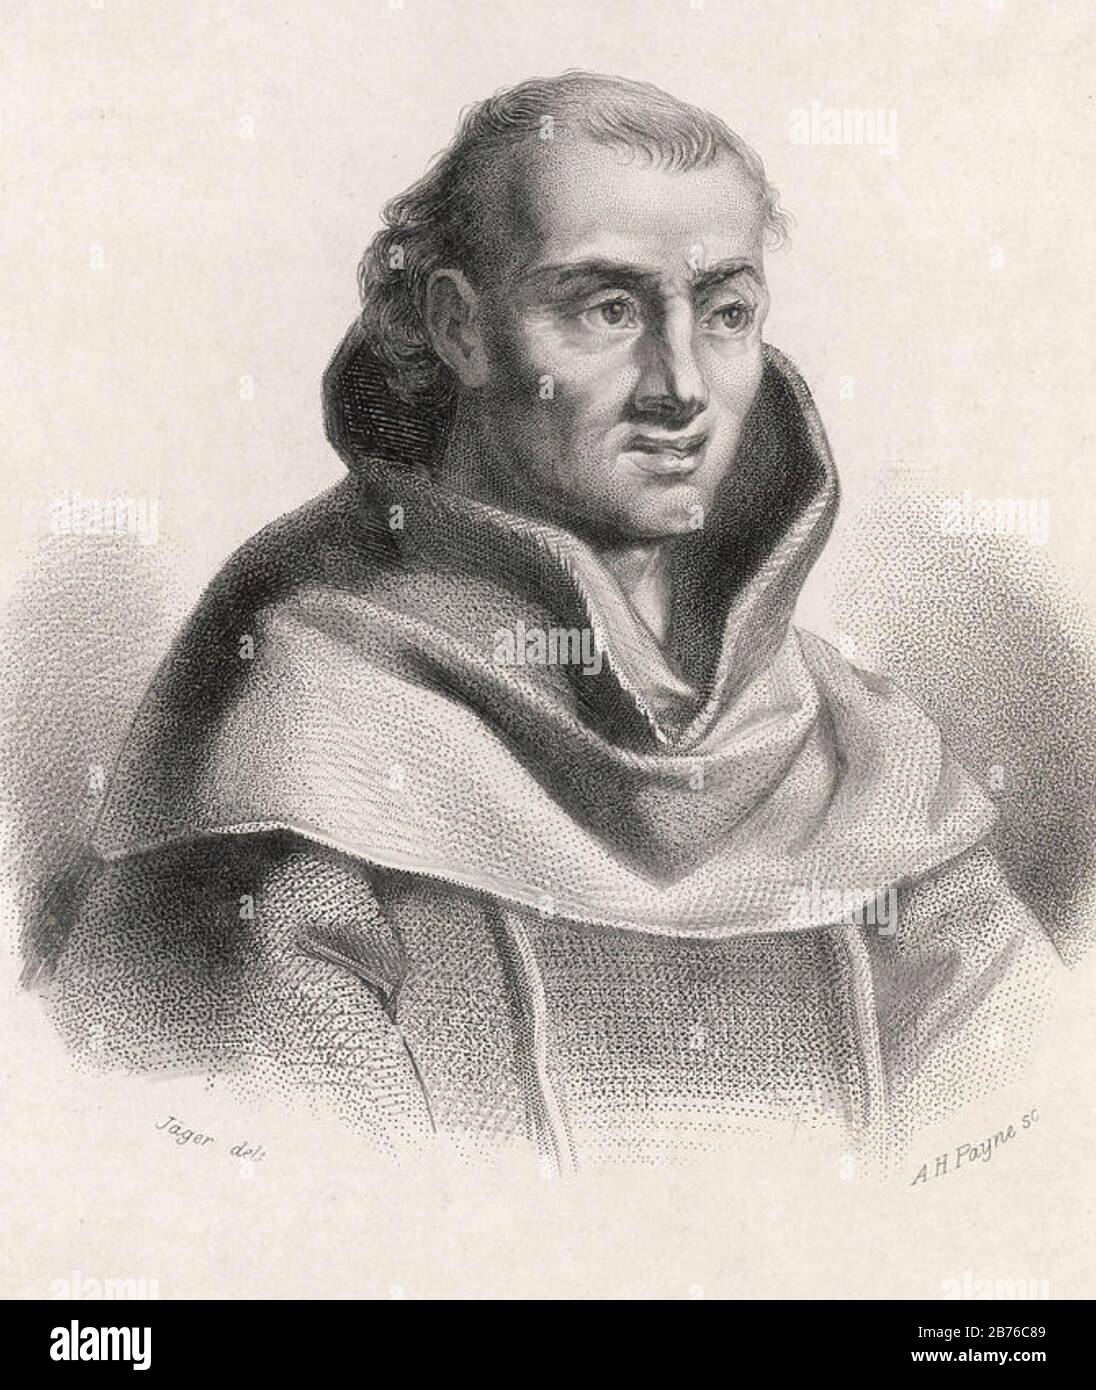 JOHANN TETZEL (c 1465-1519) Holy Roman Empire Dominican friar and preacher, notorious for selling indulgences. Stock Photo